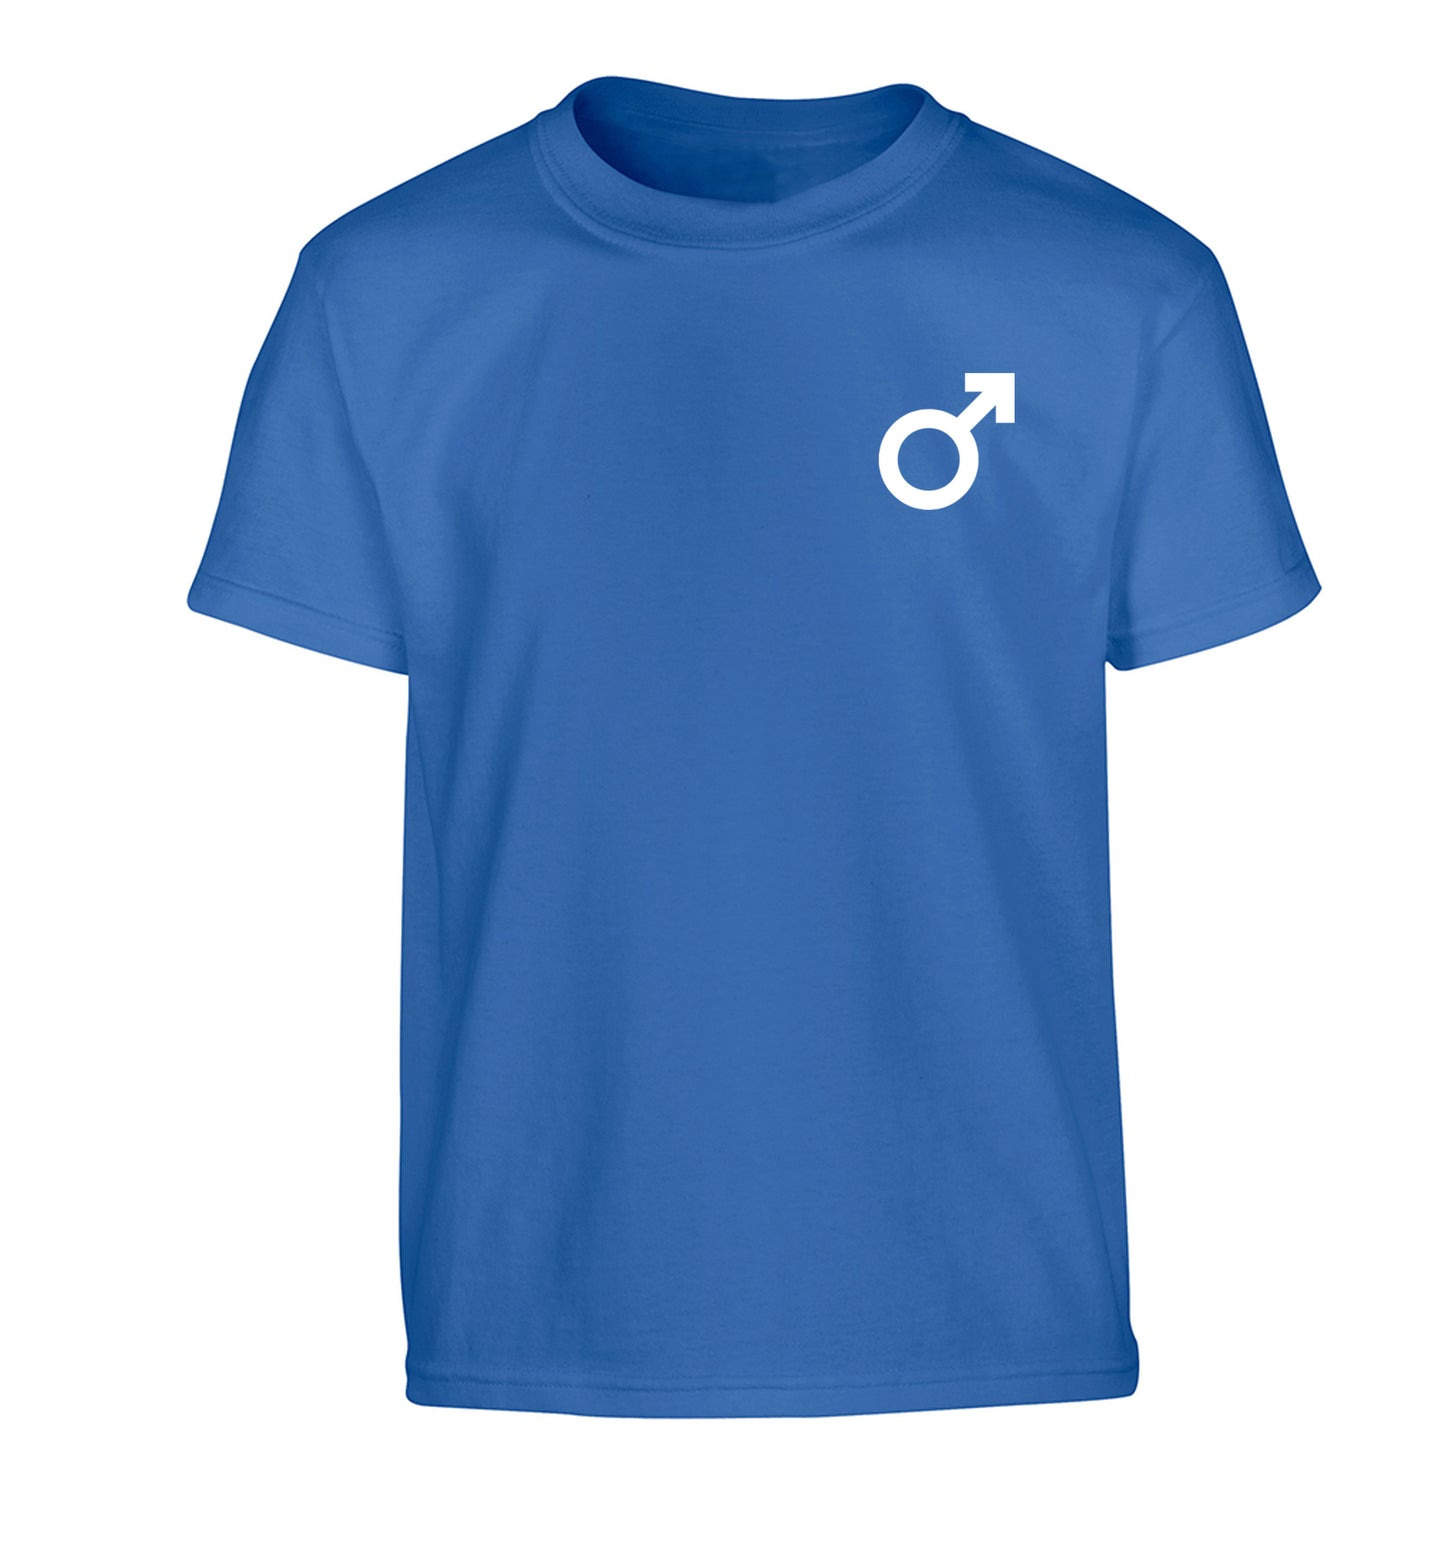 Male symbol pocket Children's blue Tshirt 12-14 Years